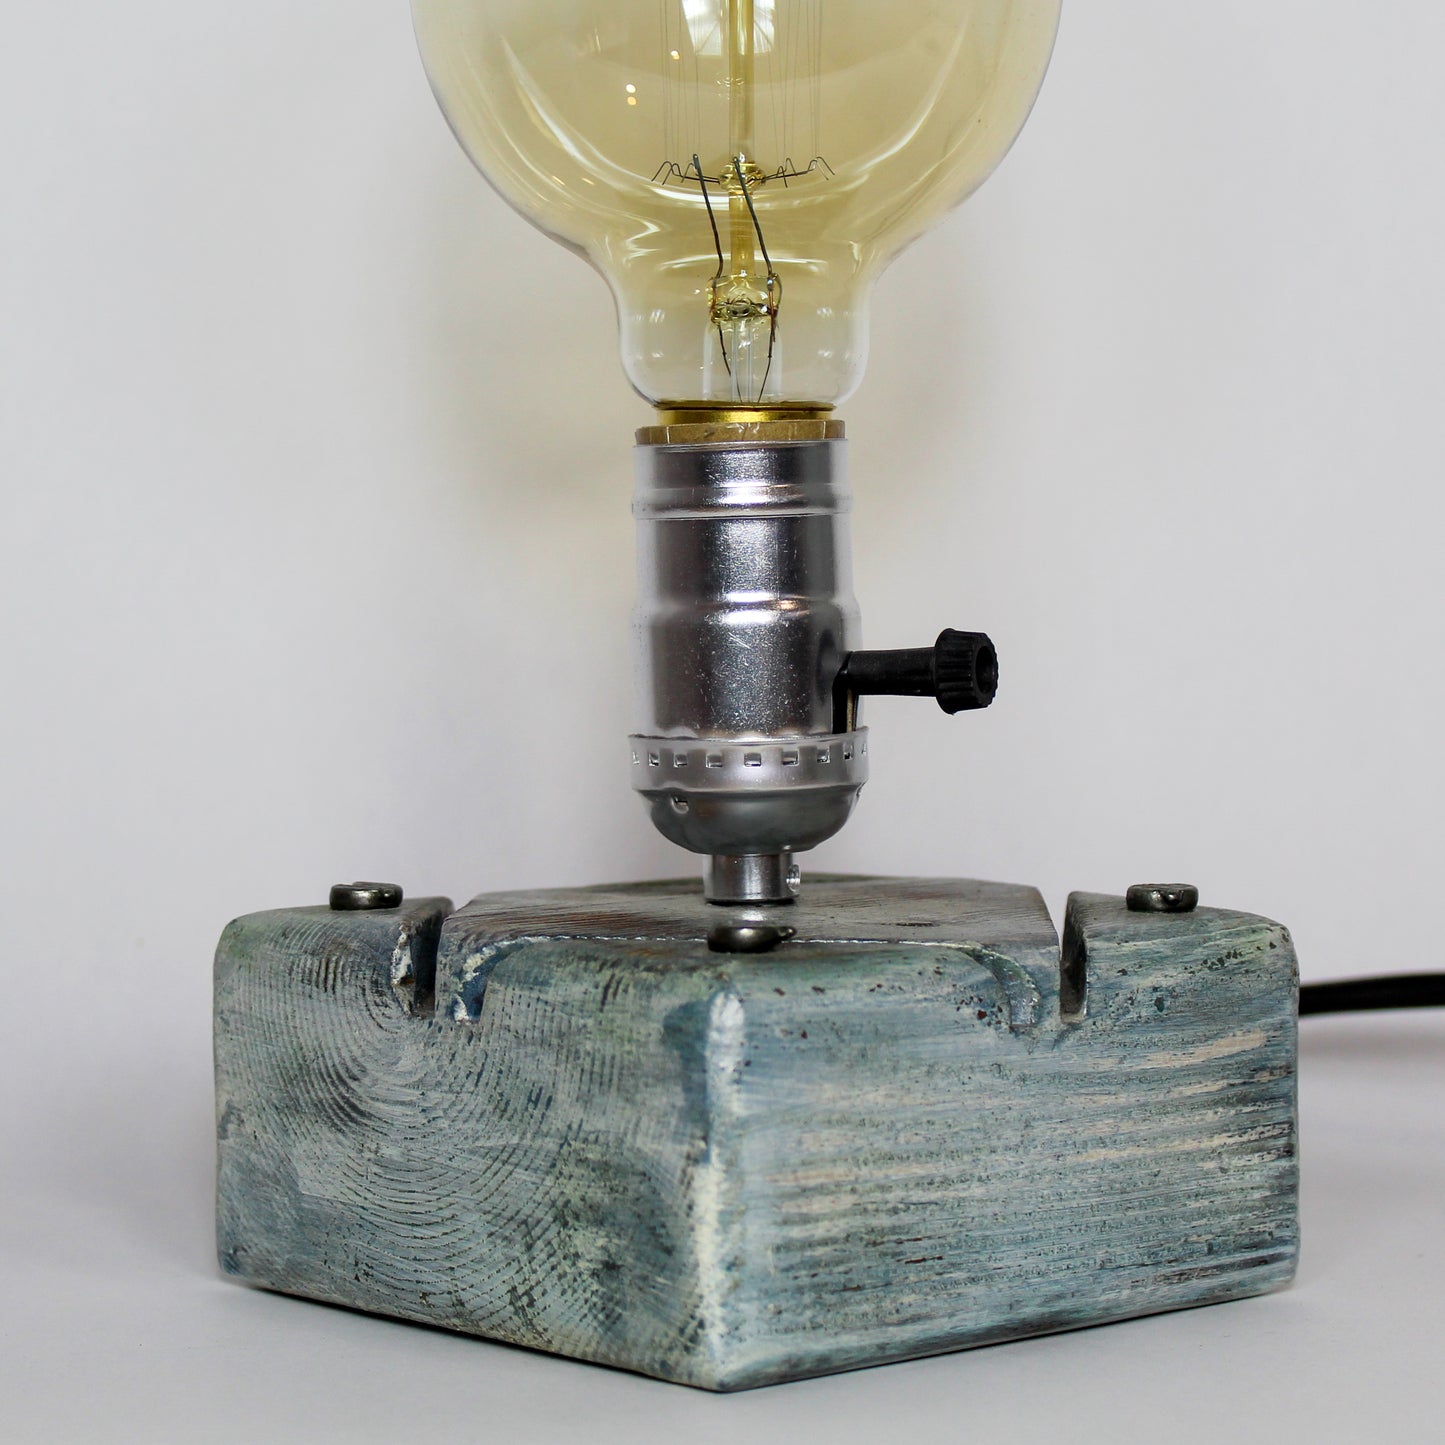 Edison Table Lamp, Desk Lamp, Industrial Desk Lamp, Table Lamp, Farmhouse Table Lamp, Table Decor